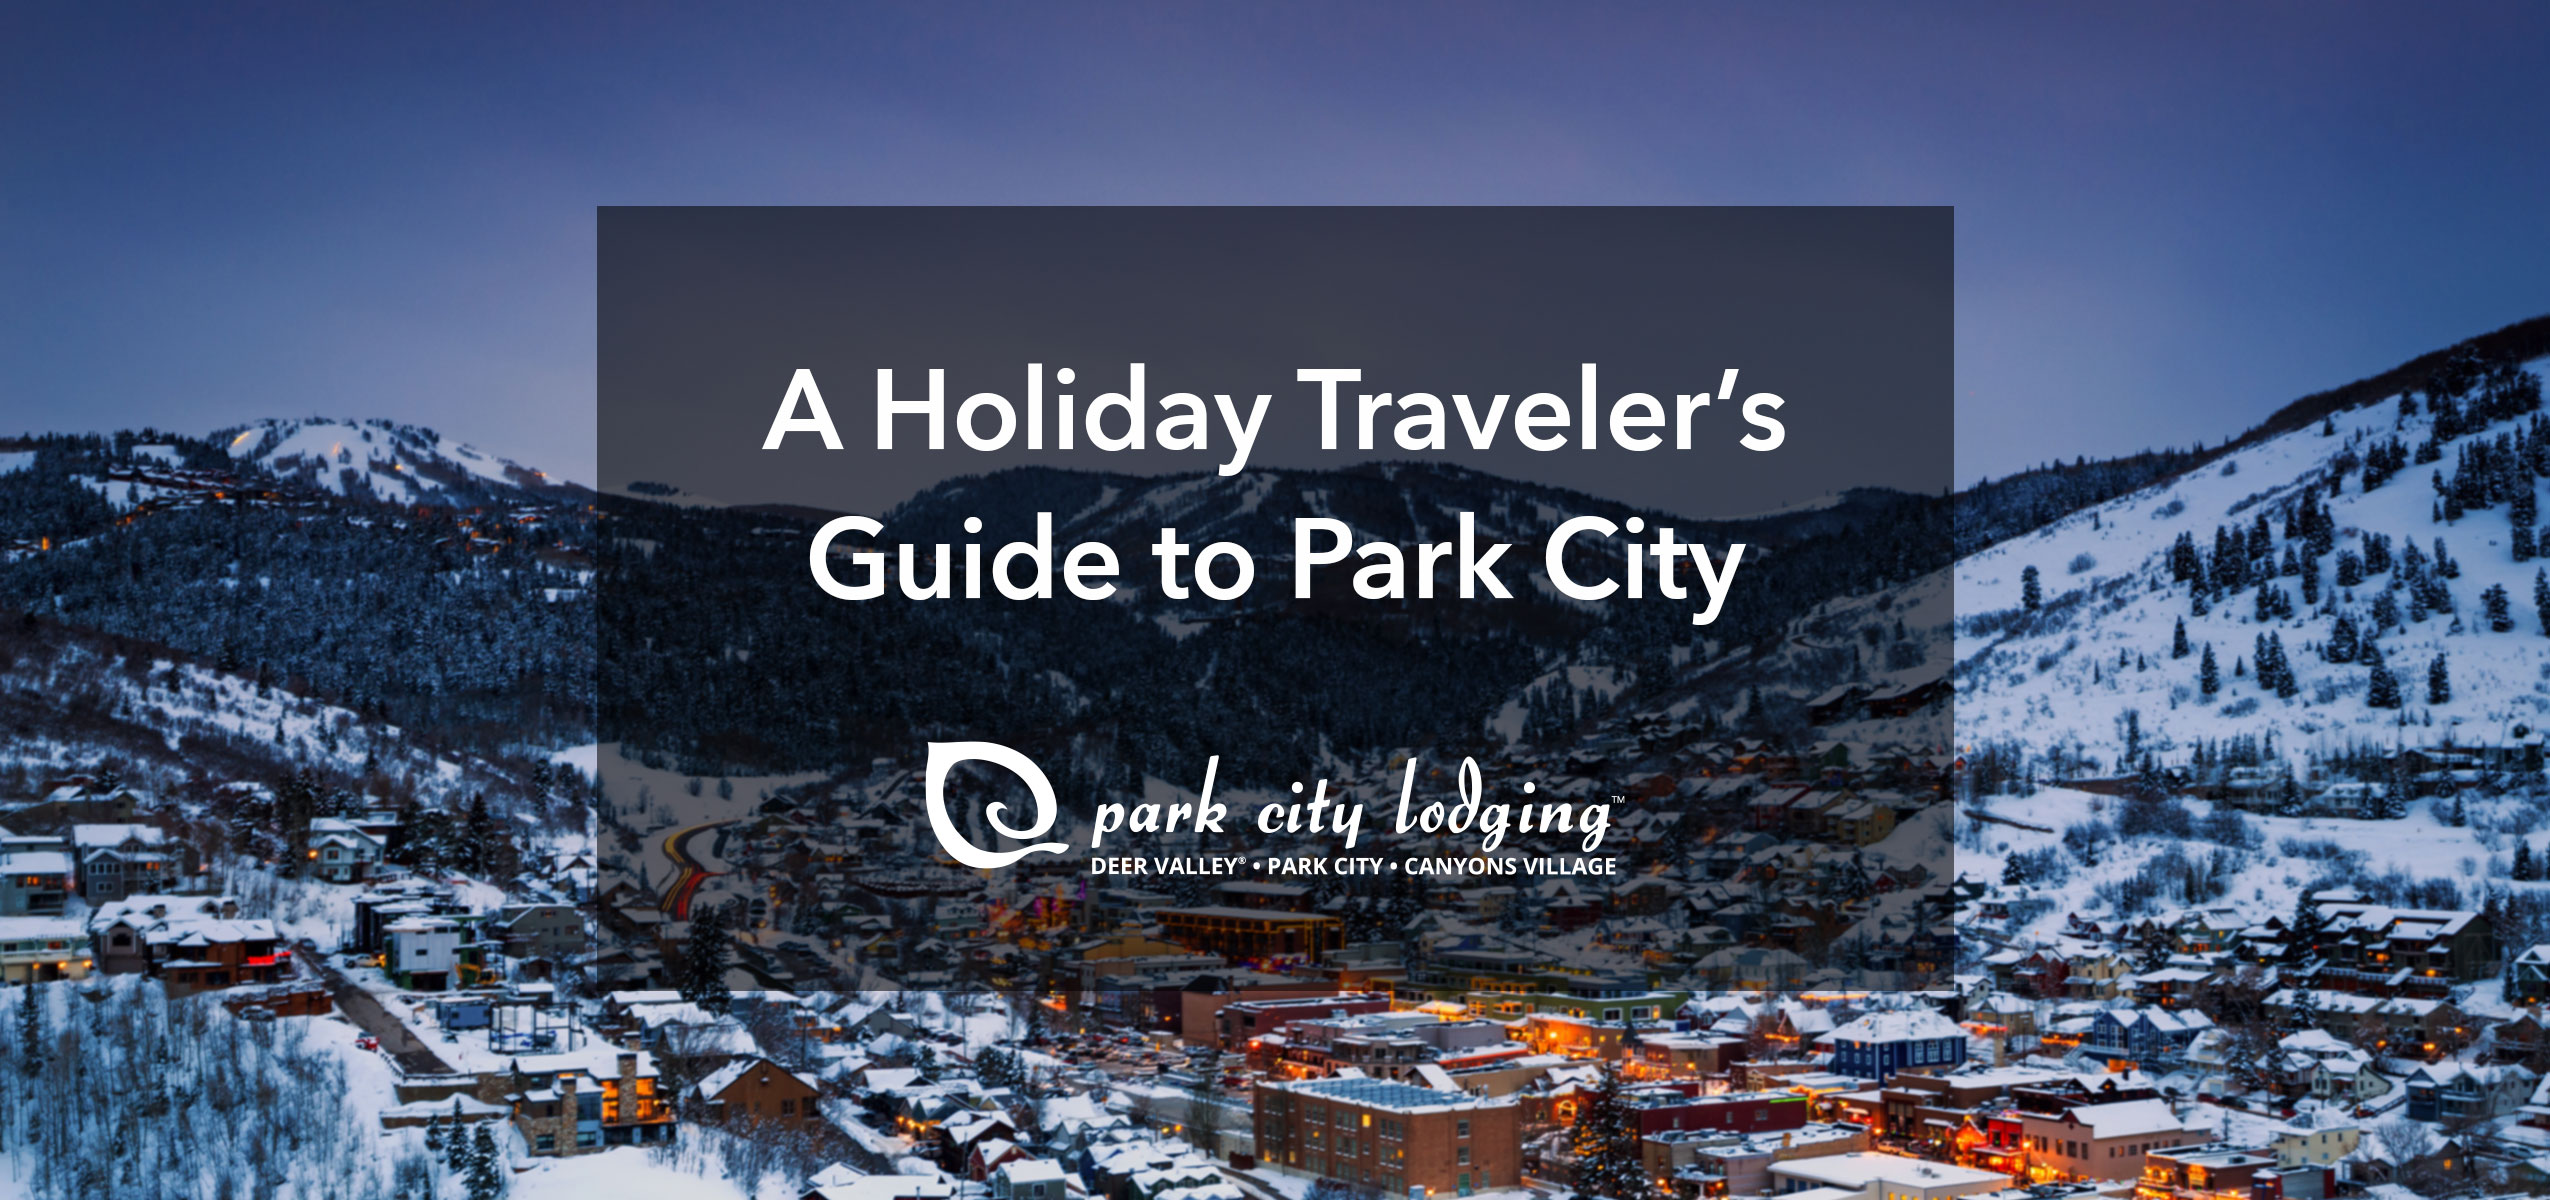 park city lodging holiday guidebook